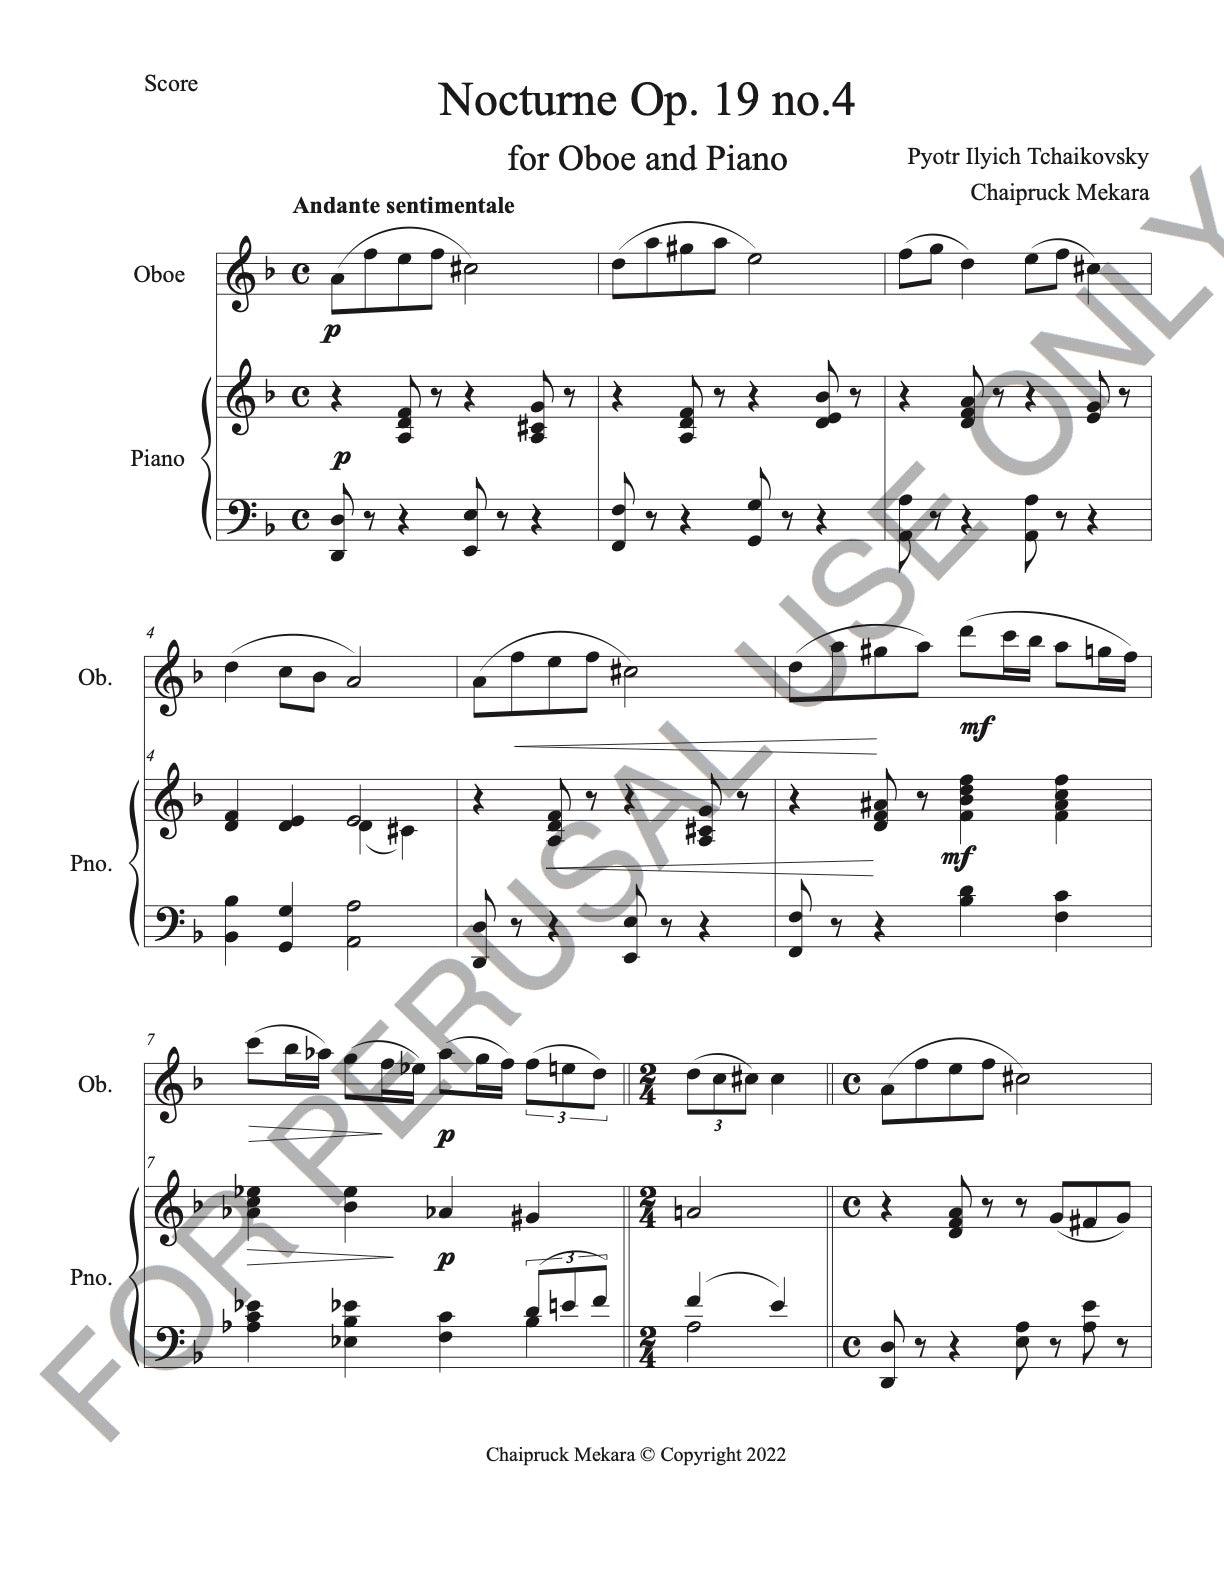 Oboe and Piano sheet music: Tchaikovsky's Nocturne, Op. 19 - ChaipruckMekara